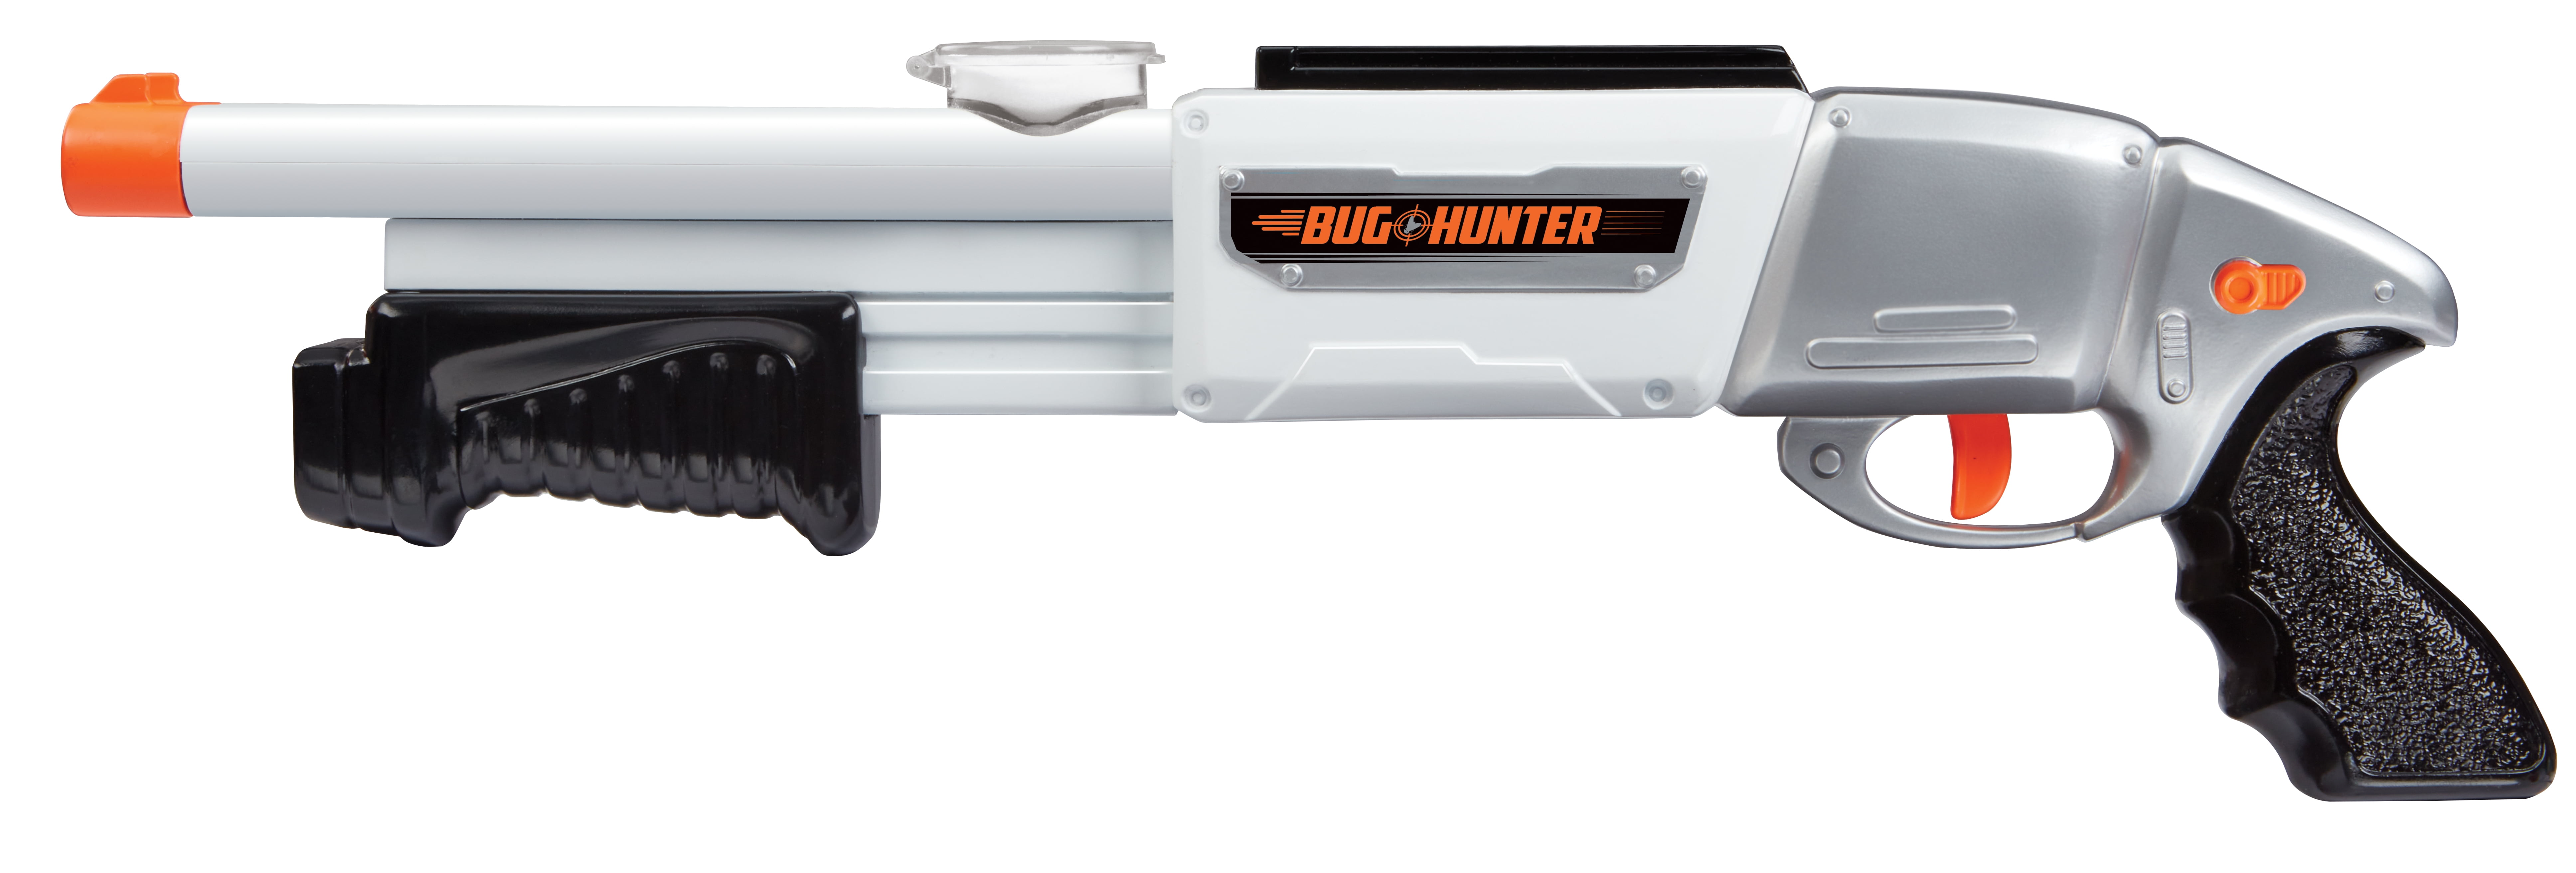 Air Warriors Bug Hunter Double Barrel Salt Blaster w/ Dual Stage Trigger $9.98 + Free S&H w/ Walmart+ or $35+